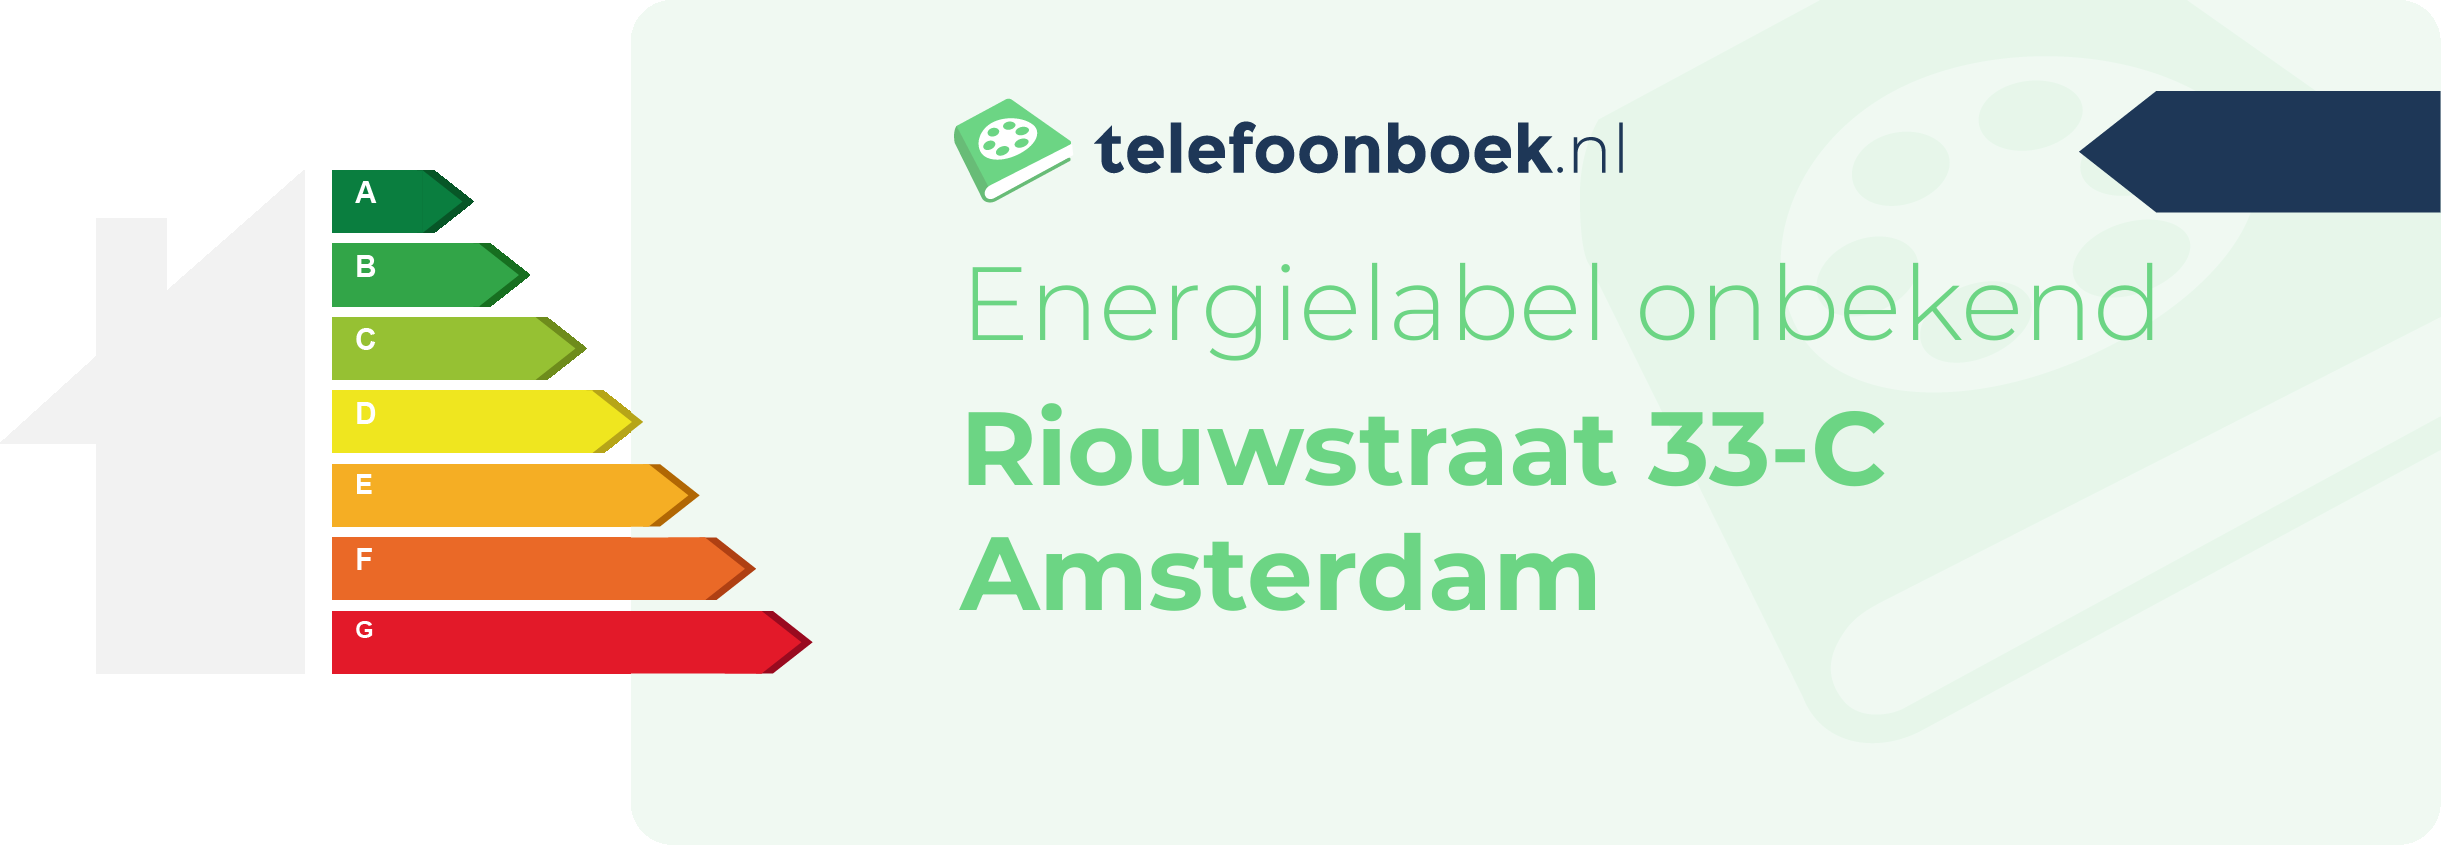 Energielabel Riouwstraat 33-C Amsterdam